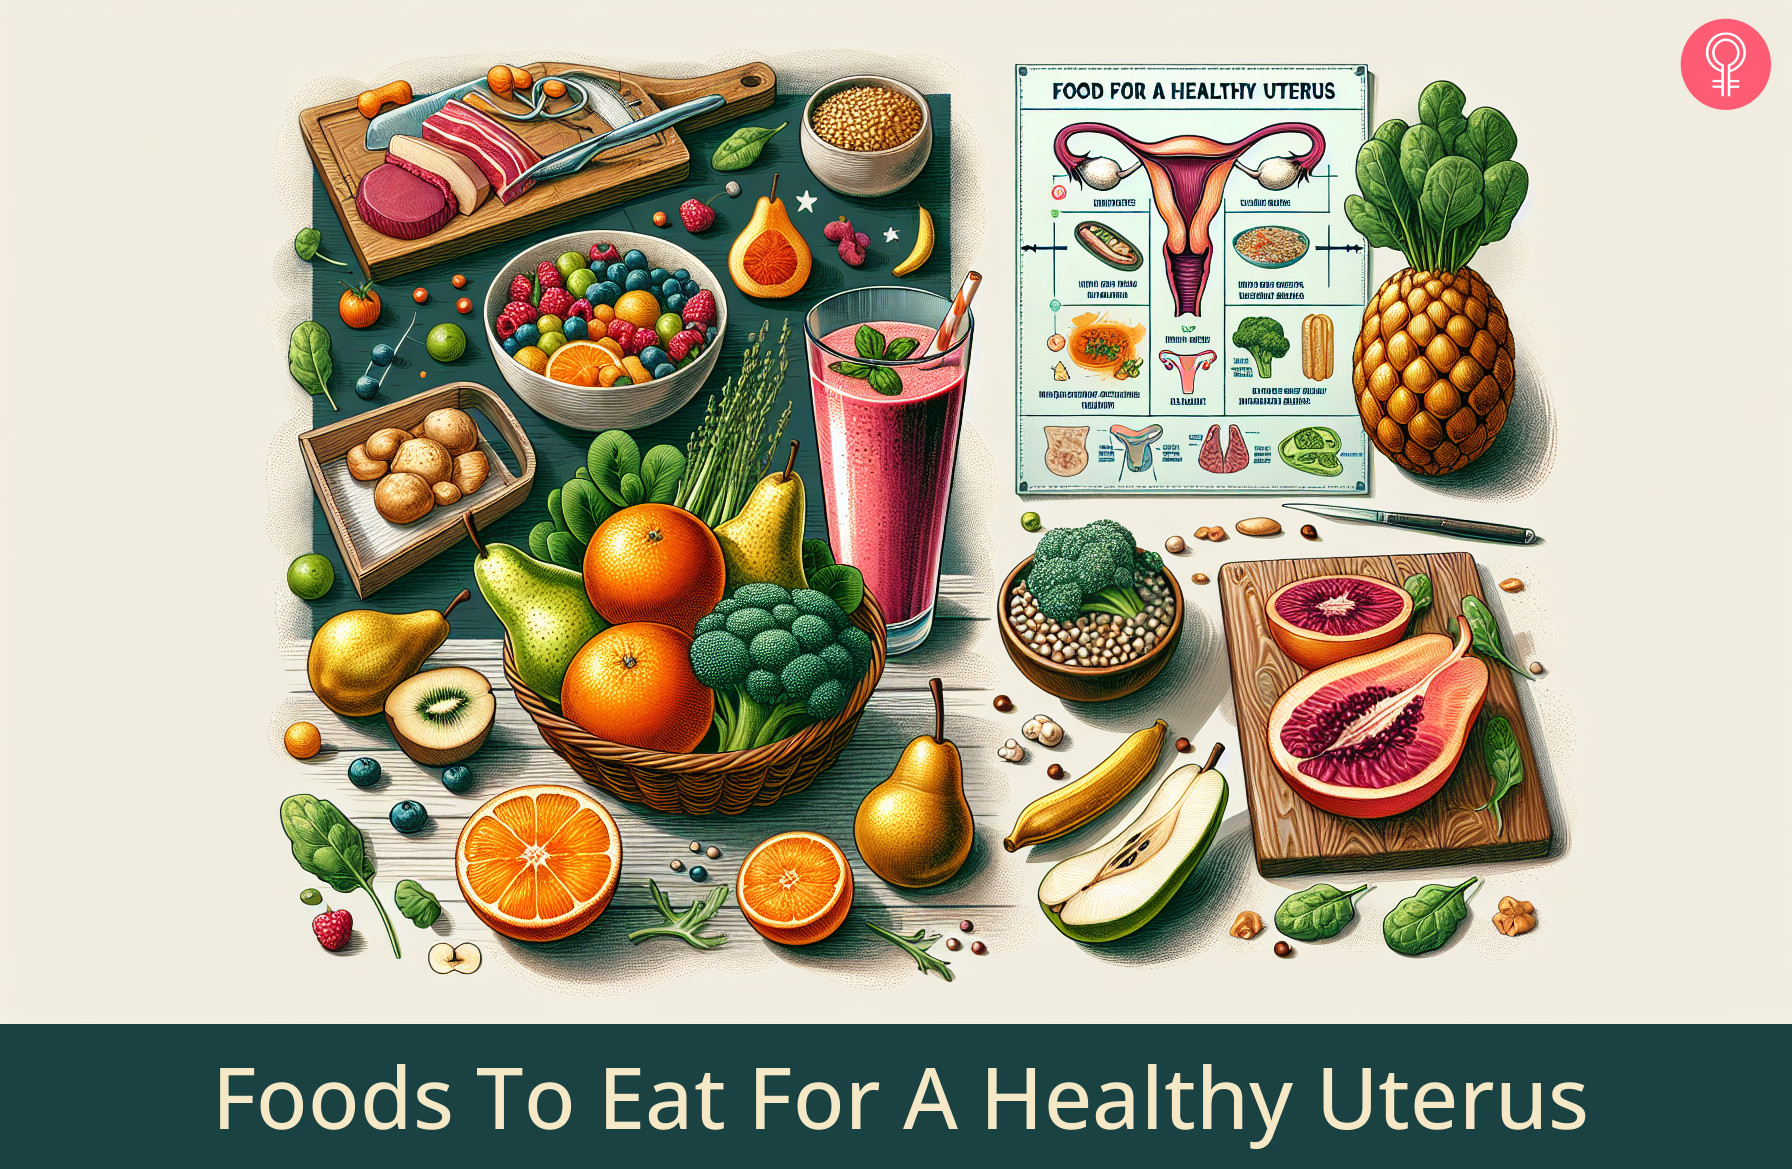 food for healthy uterus_illustration